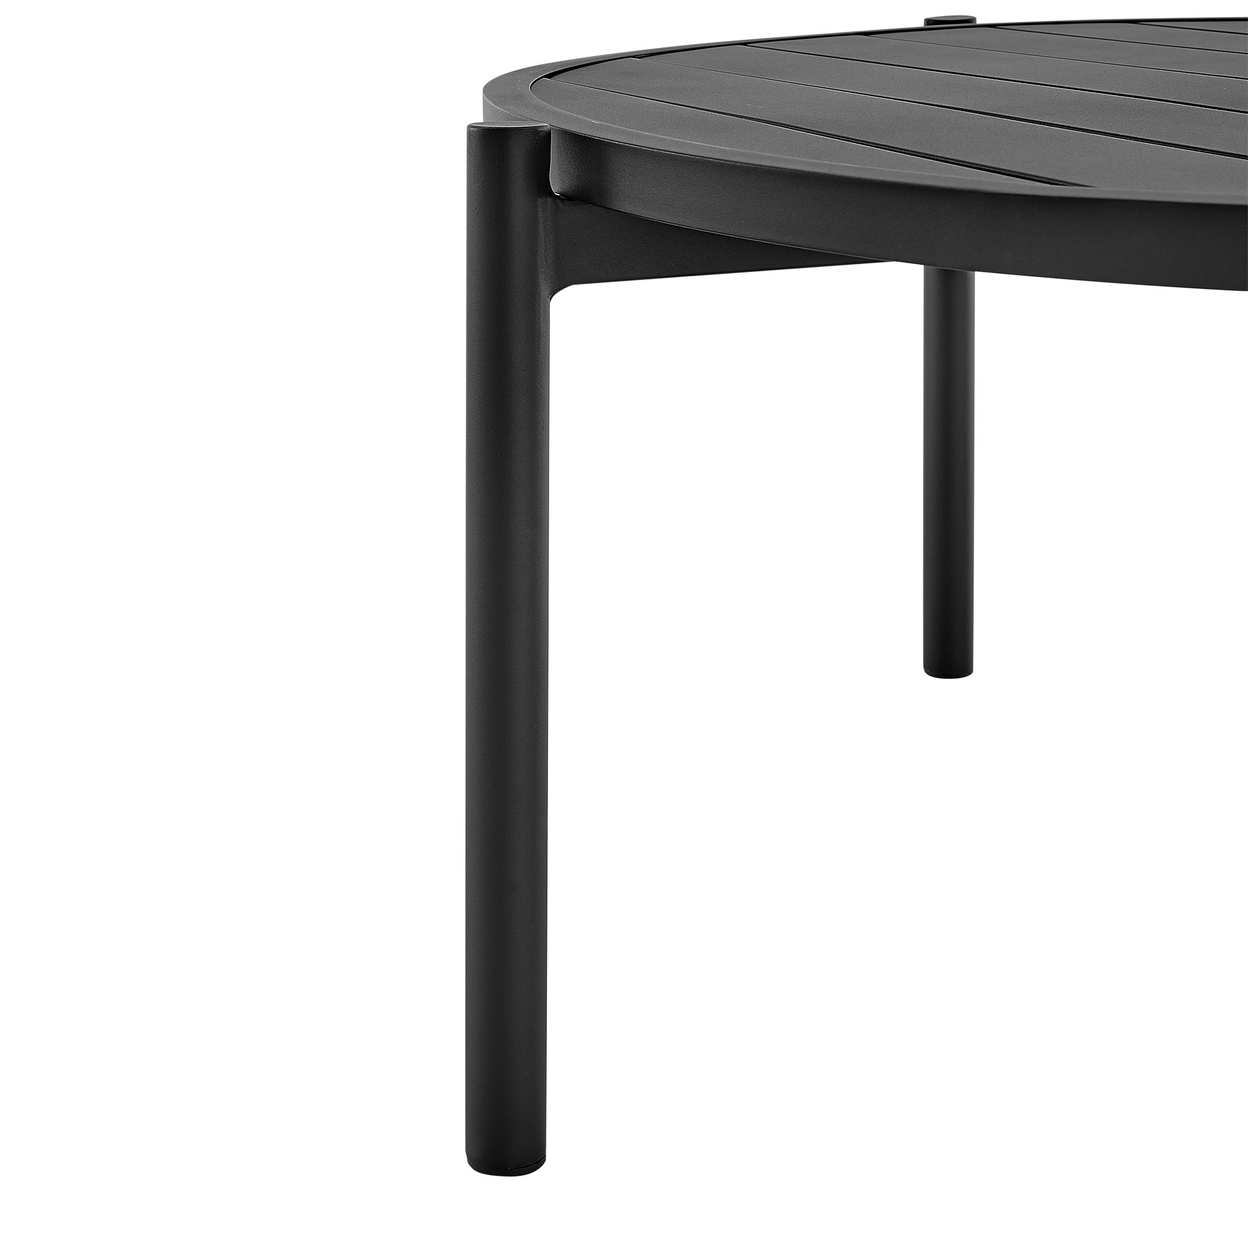 42 Inch Round Patio Coffee Table, Aluminum Frame, Slatted Surface, Black- Saltoro Sherpi